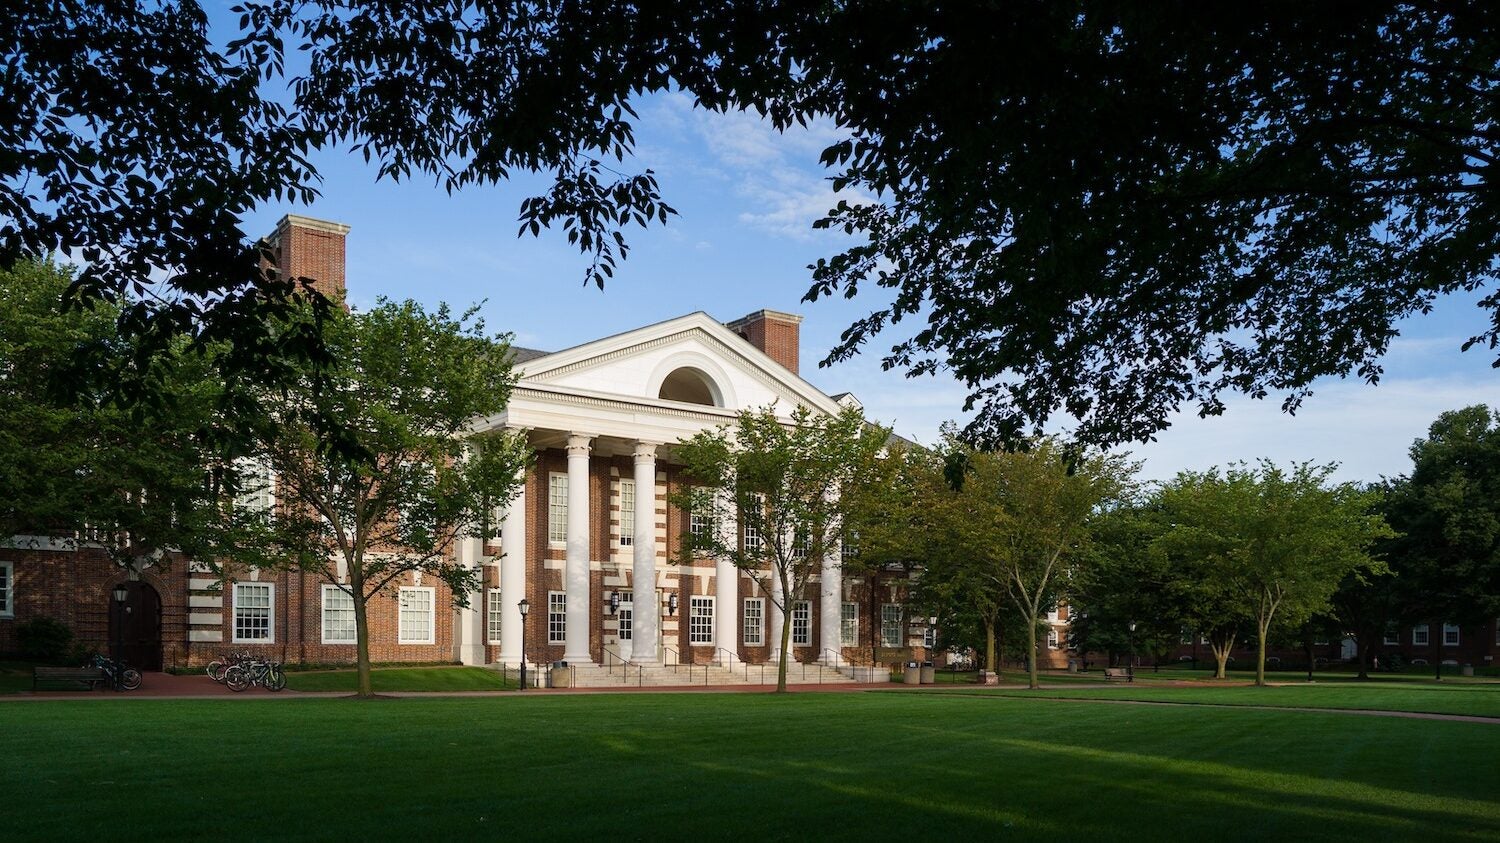 University of Delaware reinstates mask mandate just days before graduation